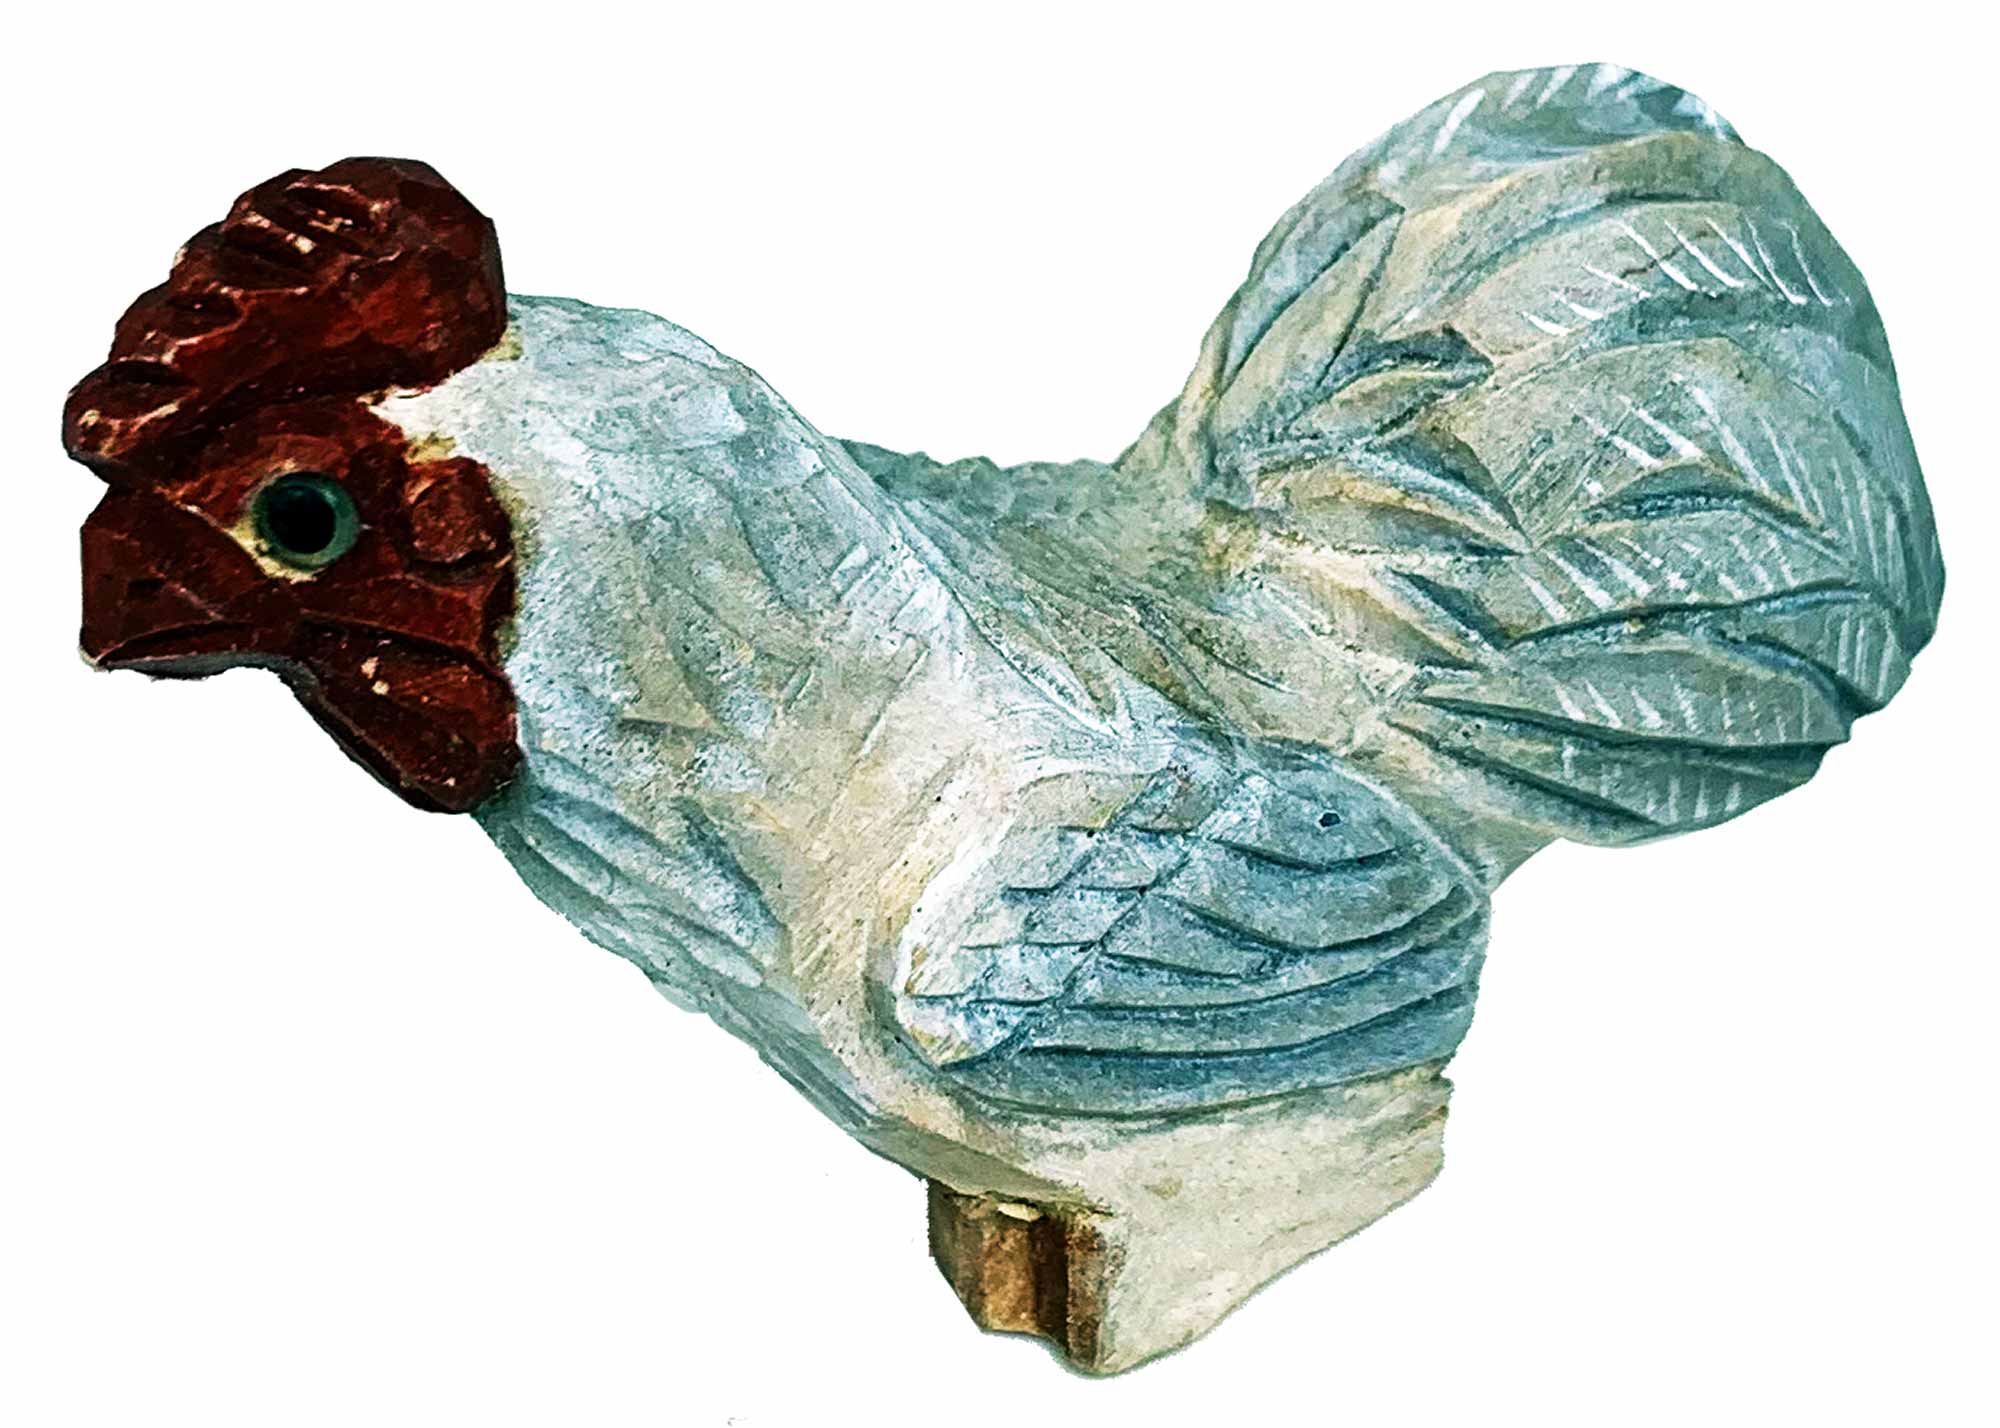 Buy Carved Chicken Rooster Figurine at GoldenCockerel.com